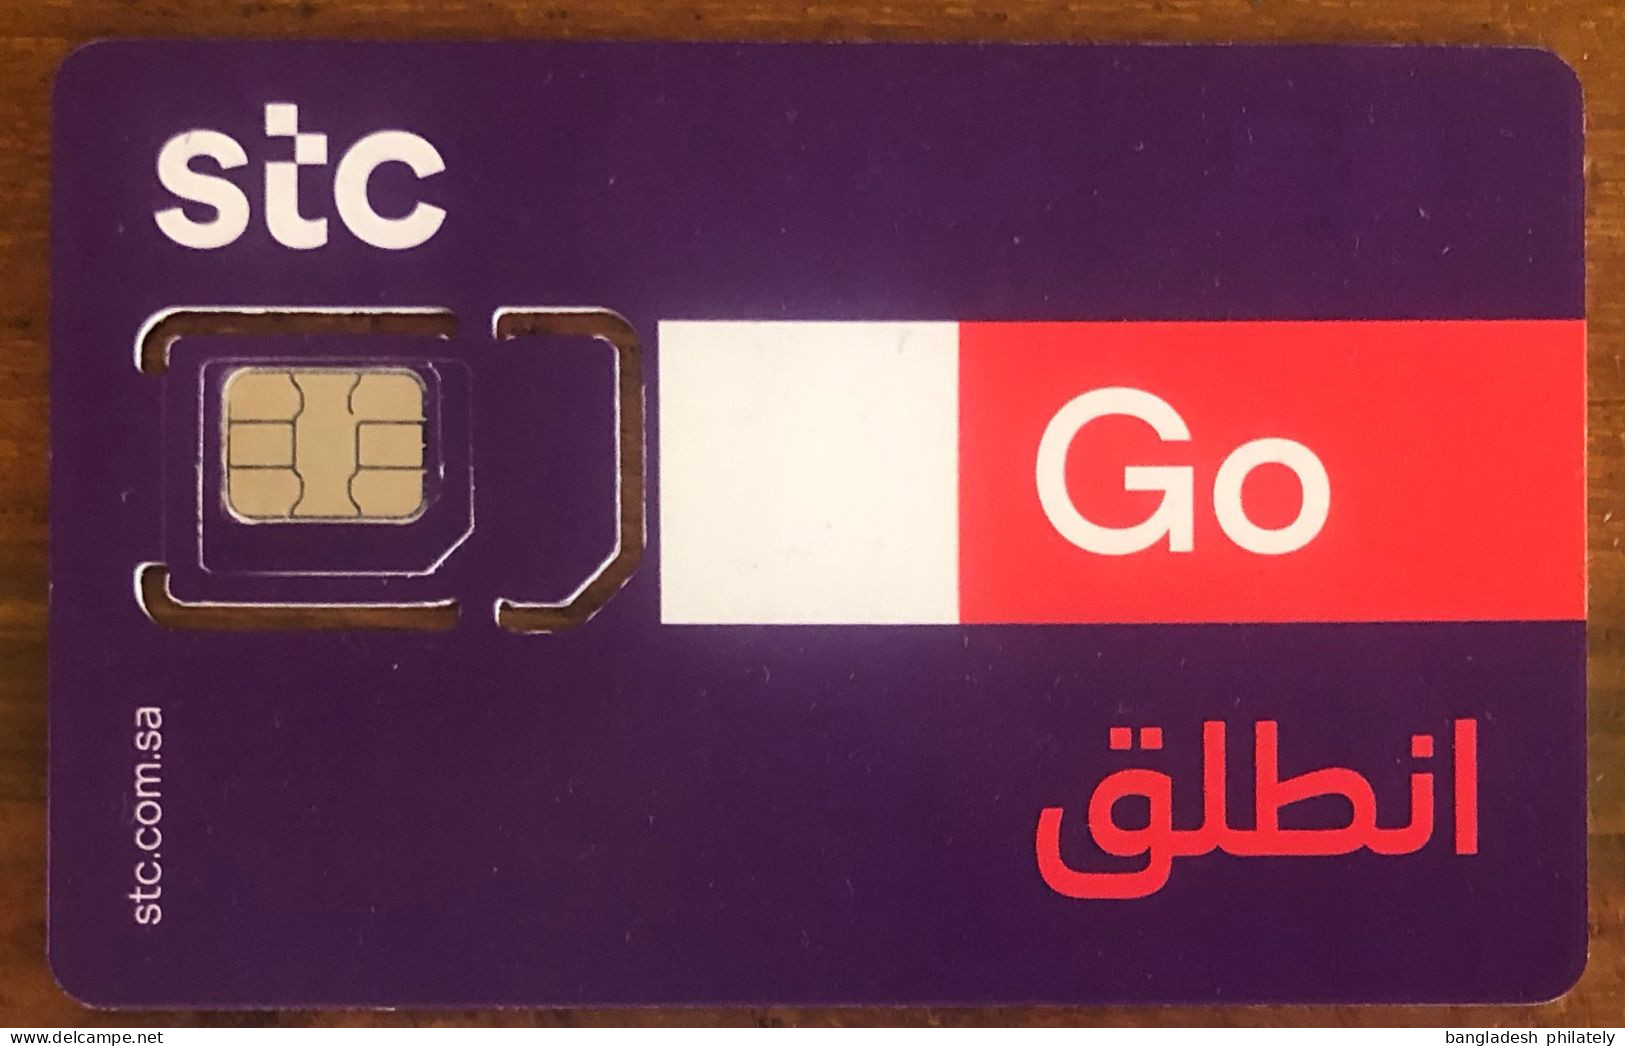 Saudi Arabia STC Mobile Large Size GSM Nano SIM Card Telecom Tele Communication See My Other Listing With More Cards - Bangladesh